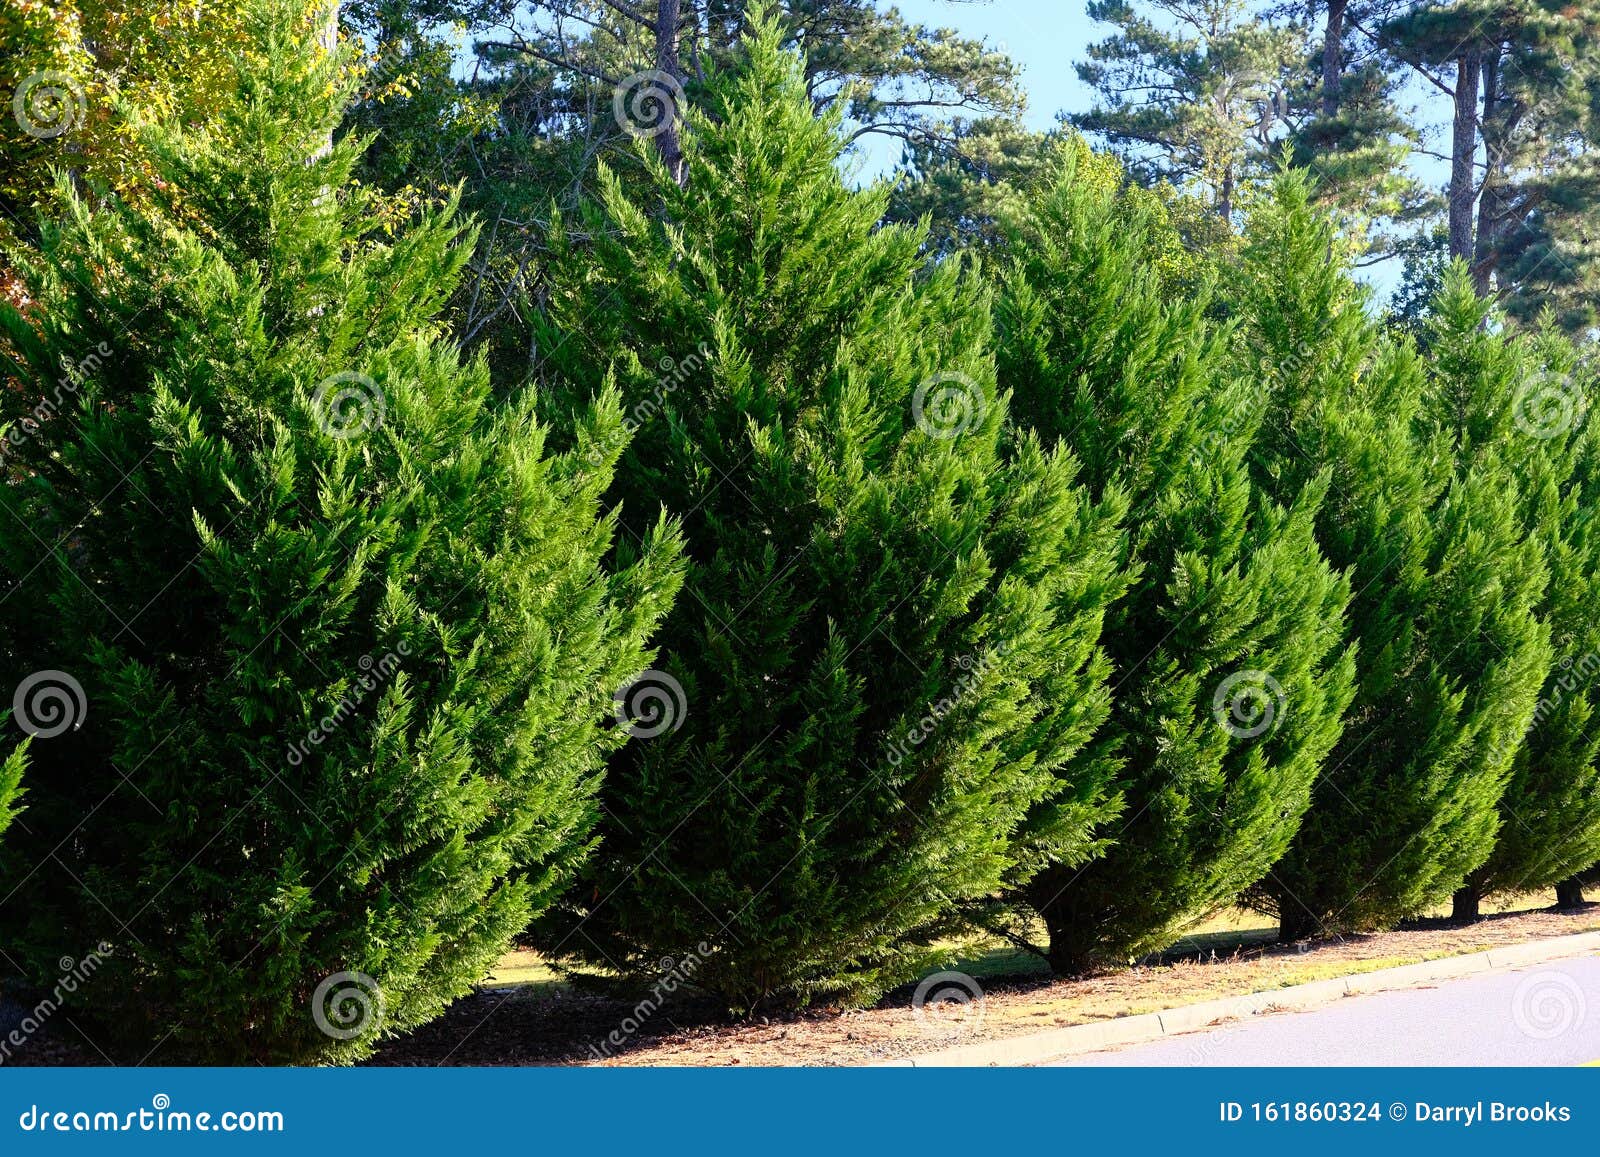 leyland cypress trees